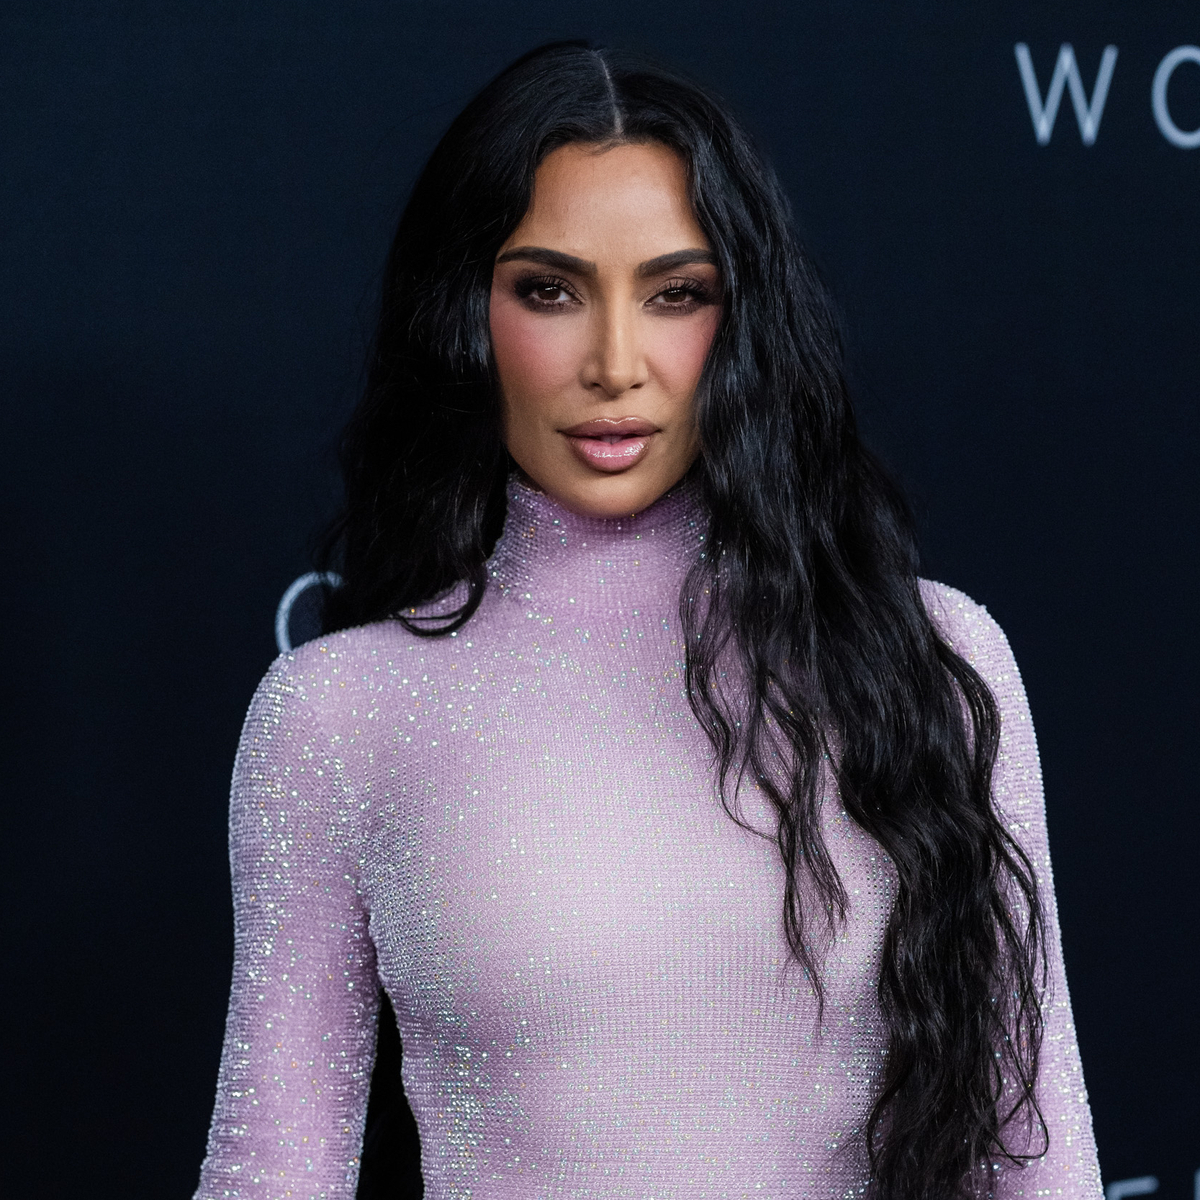 Kim Kardashian goes bra-free in see-through tank top in NY